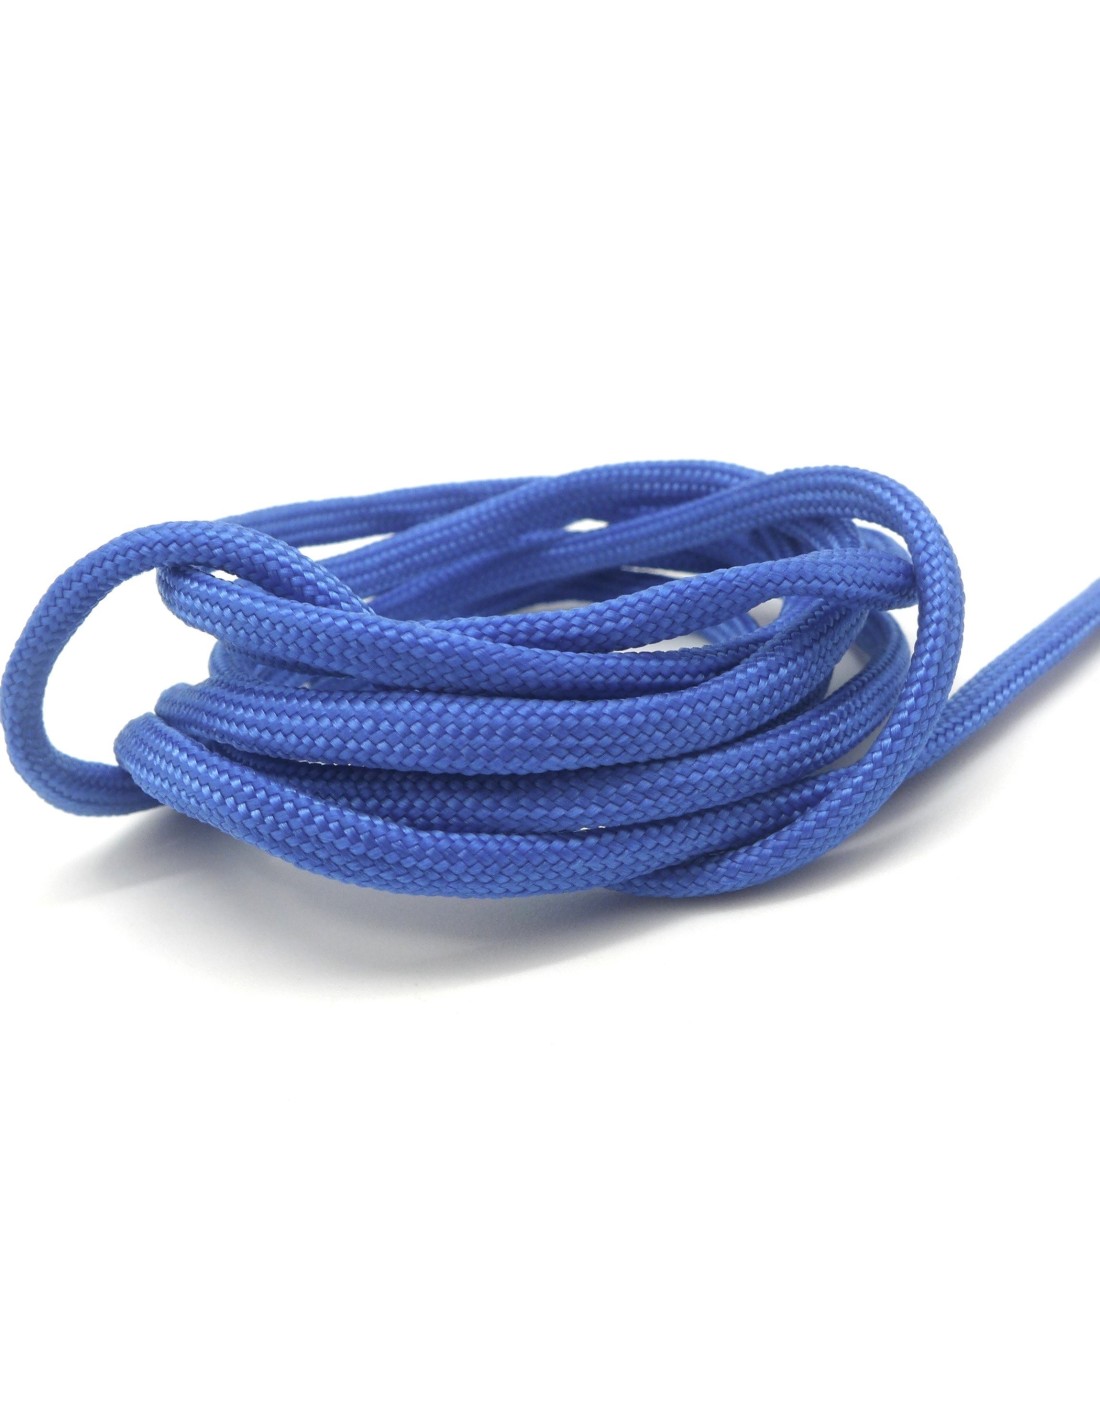 paracorde 2mm cordon nylon tressé corde nylon noir, bleu et blanc